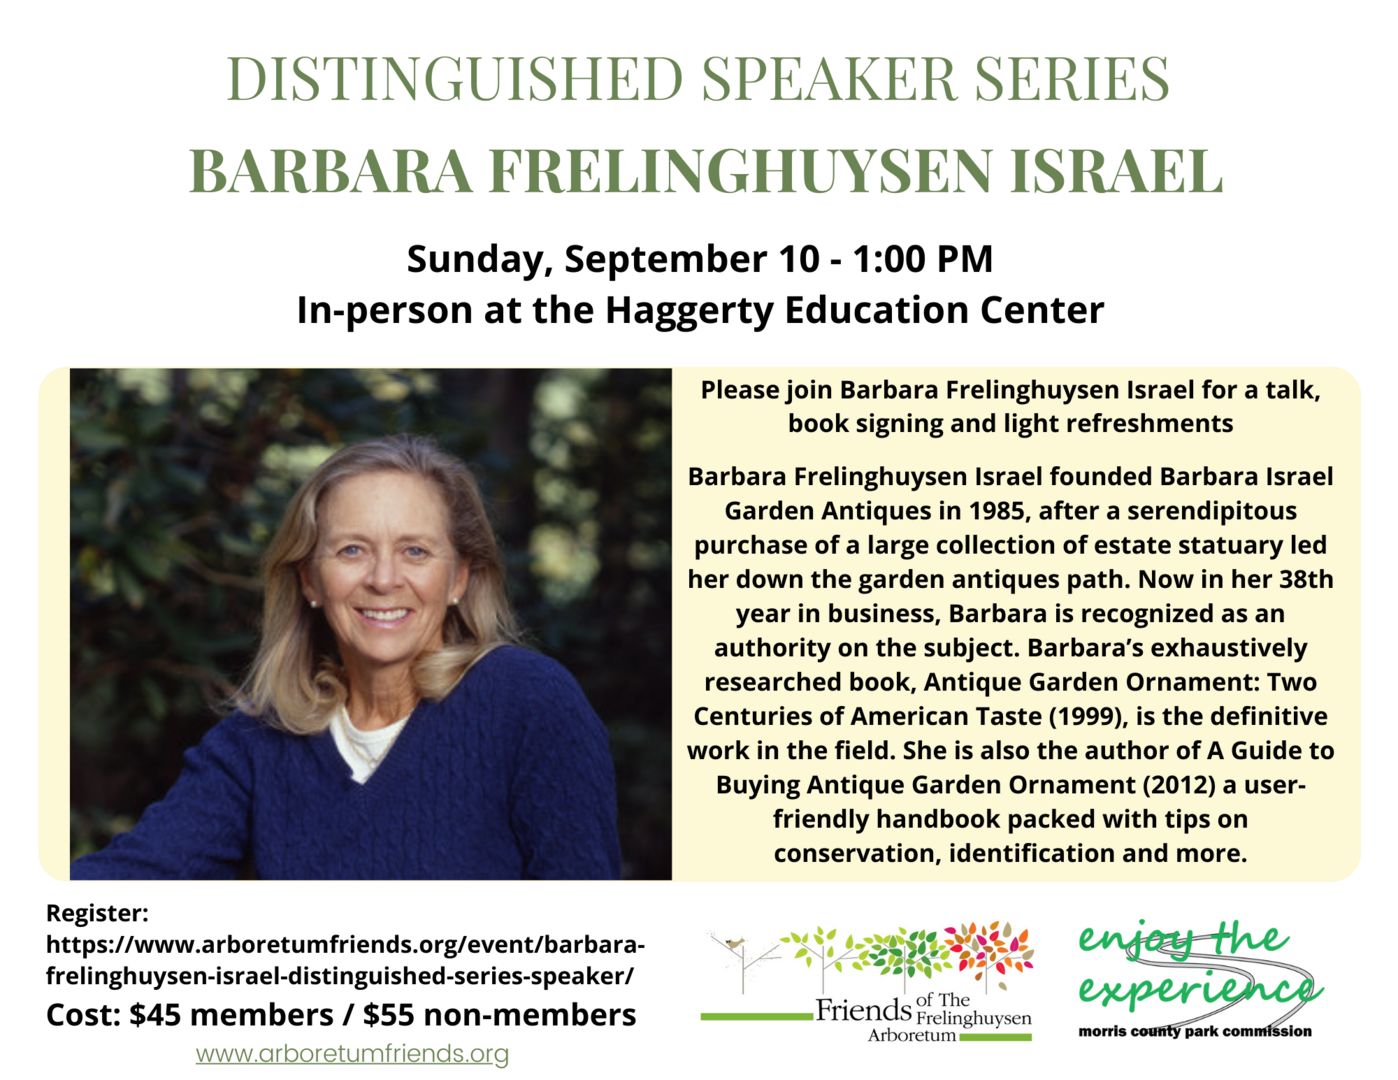 BARBARA FRELINGHUYSEN ISRAEL SPEAKS ON ANTIQUE GARDEN ORNAMENT, Morristown, New Jersey, United States